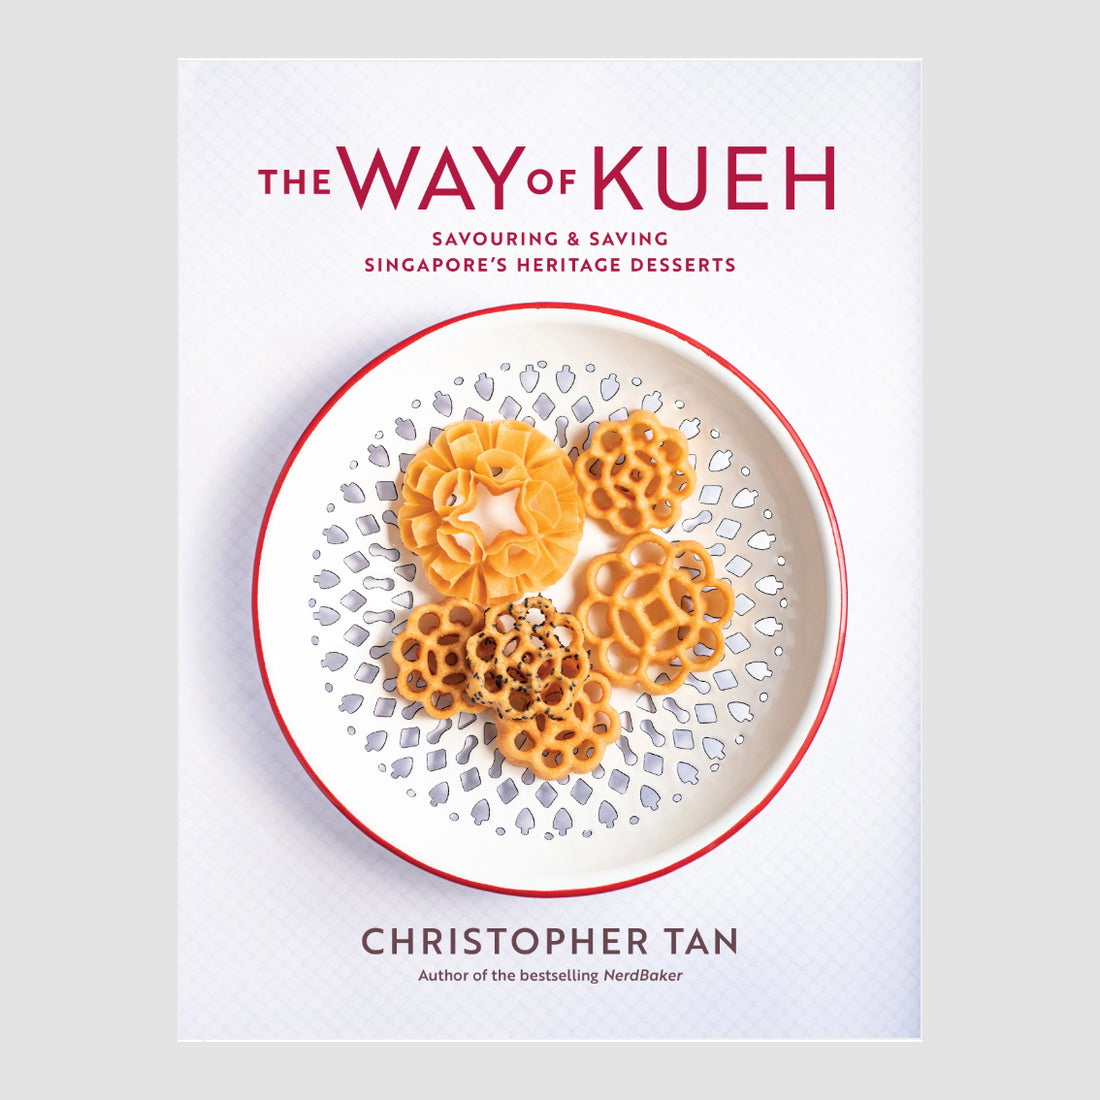 The Way of Kueh Savouring & Saving Singapore's Heritage Desserts